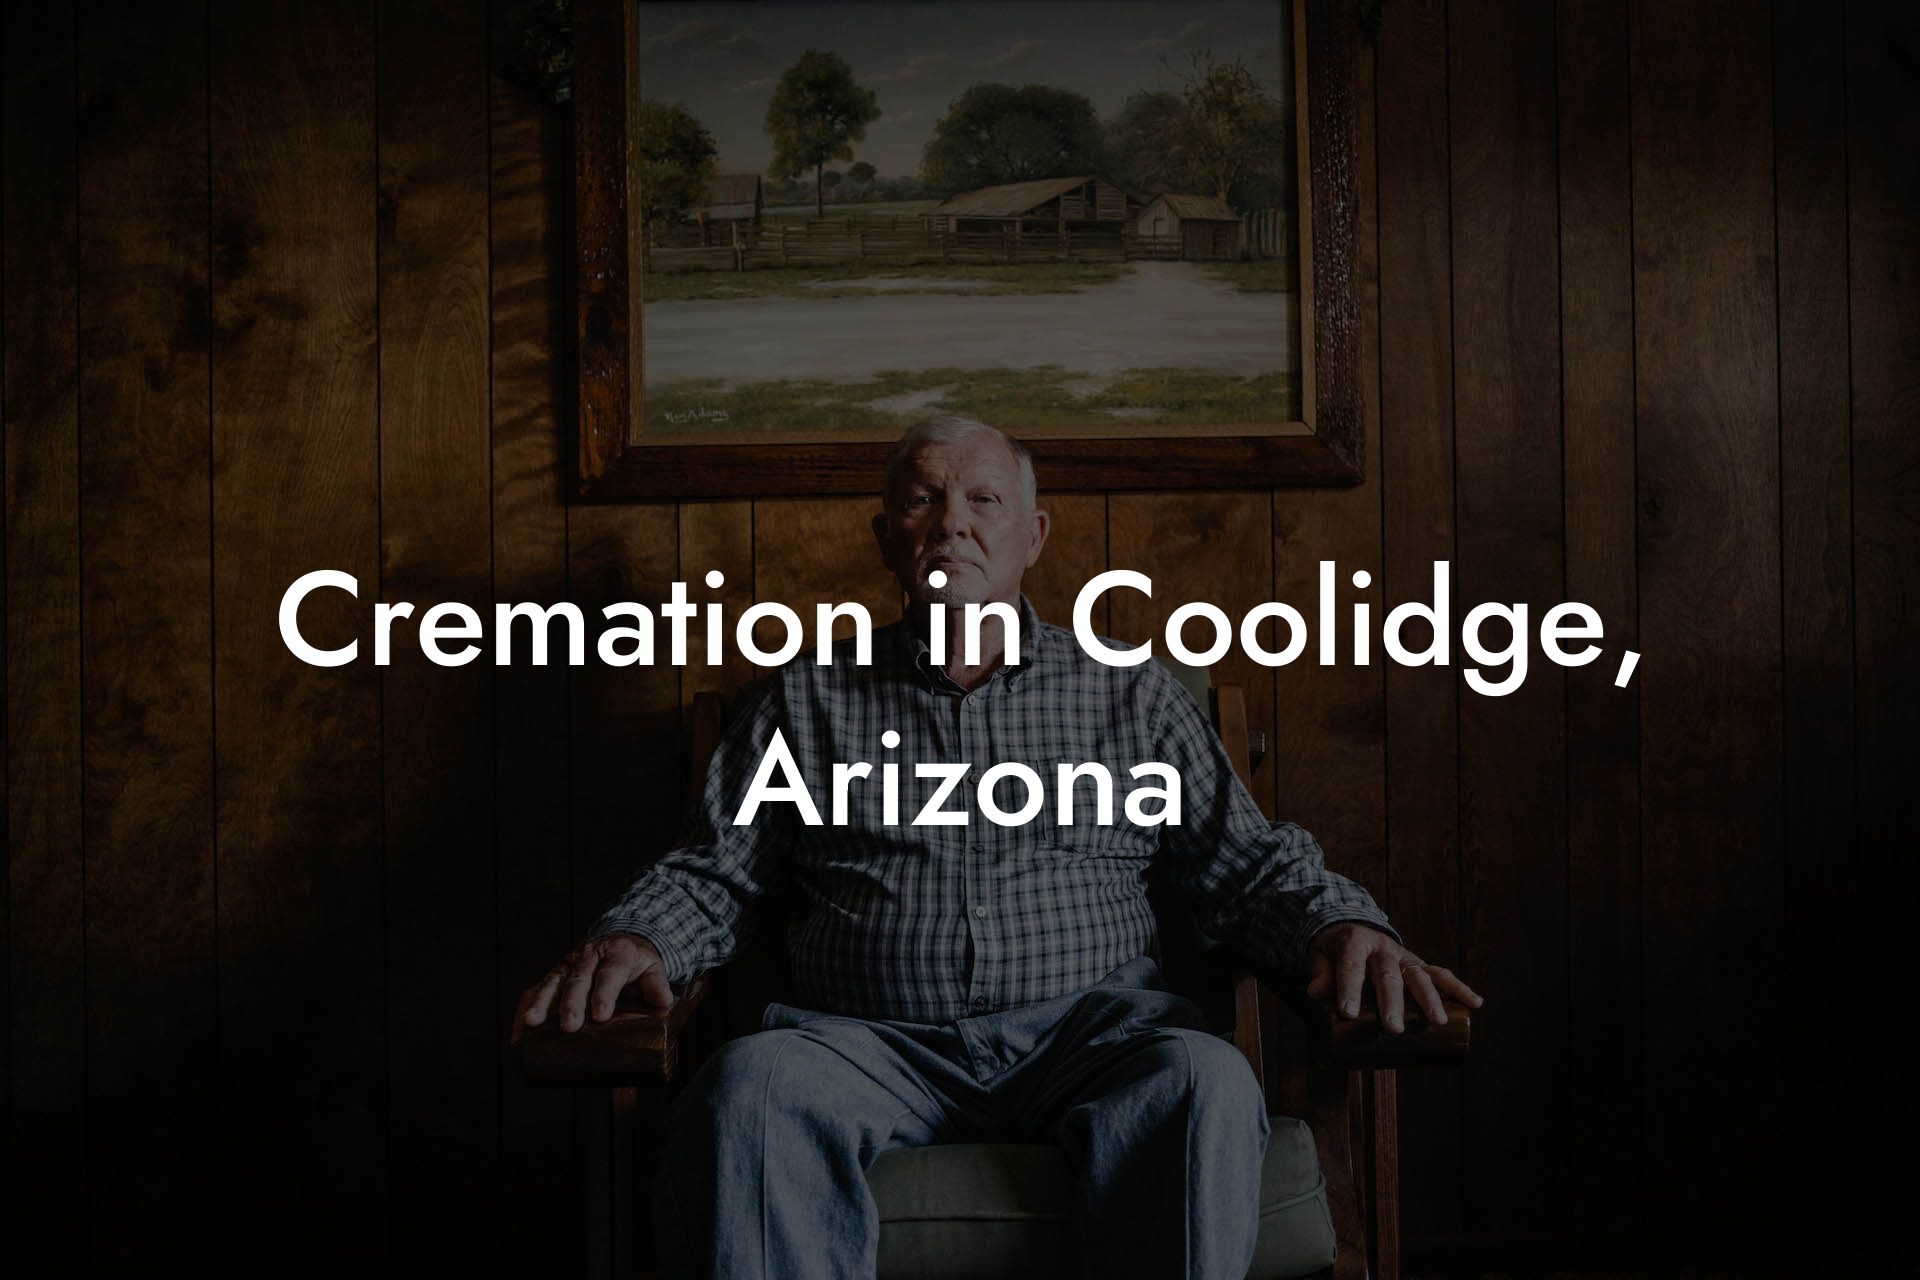 Cremation in Coolidge, Arizona